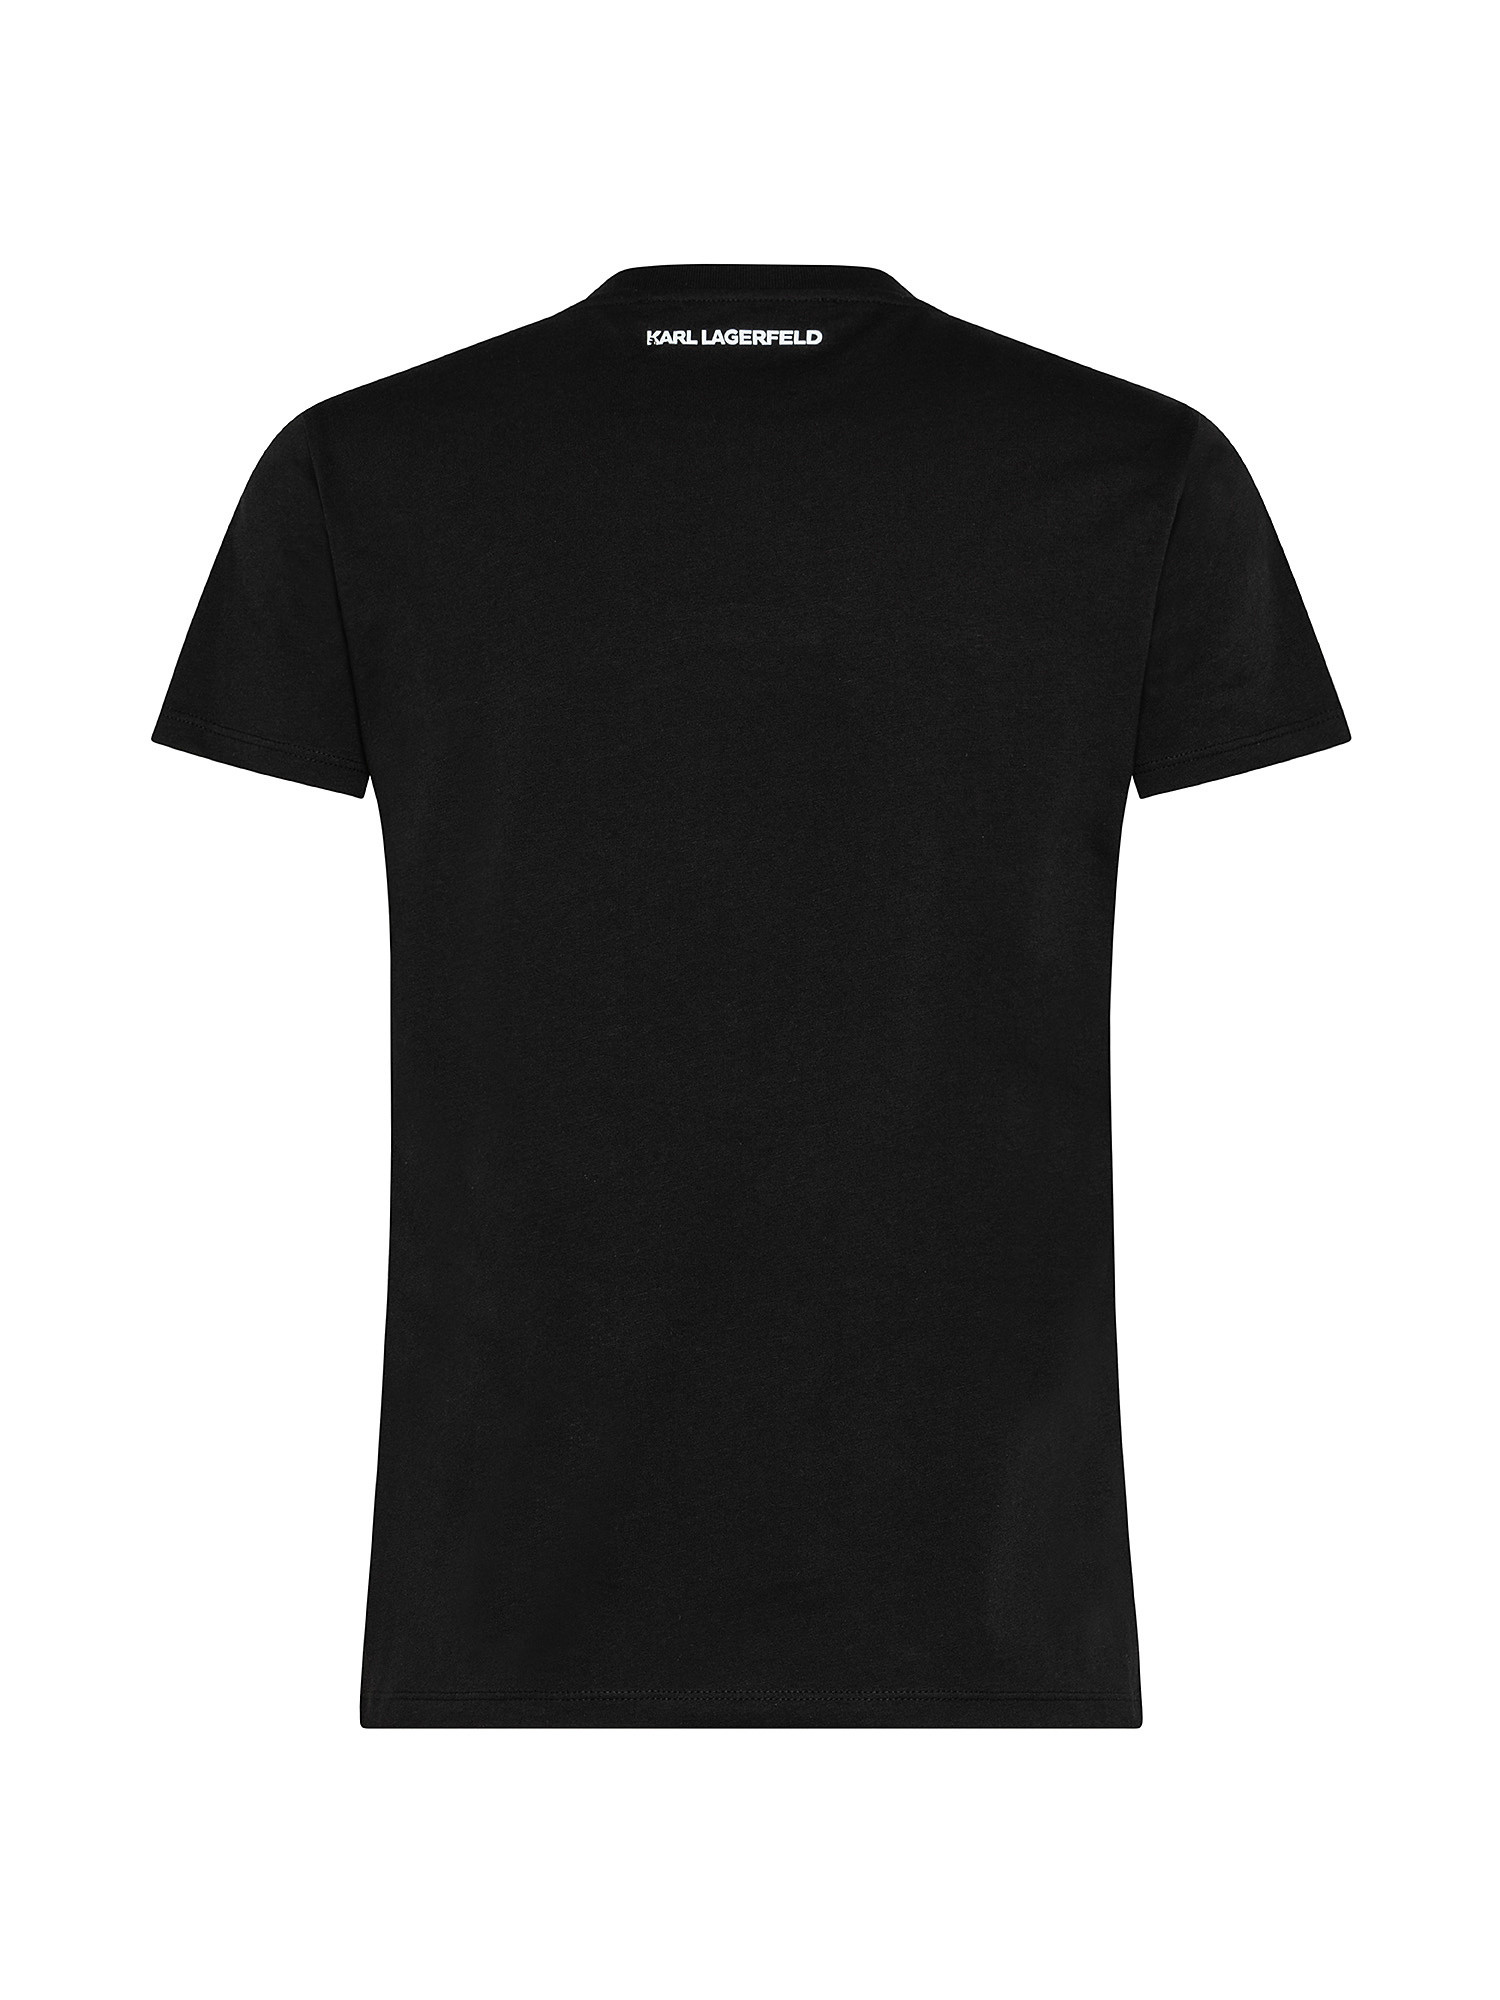 Jelly Karl Logo T-Shirt, Black, large image number 1